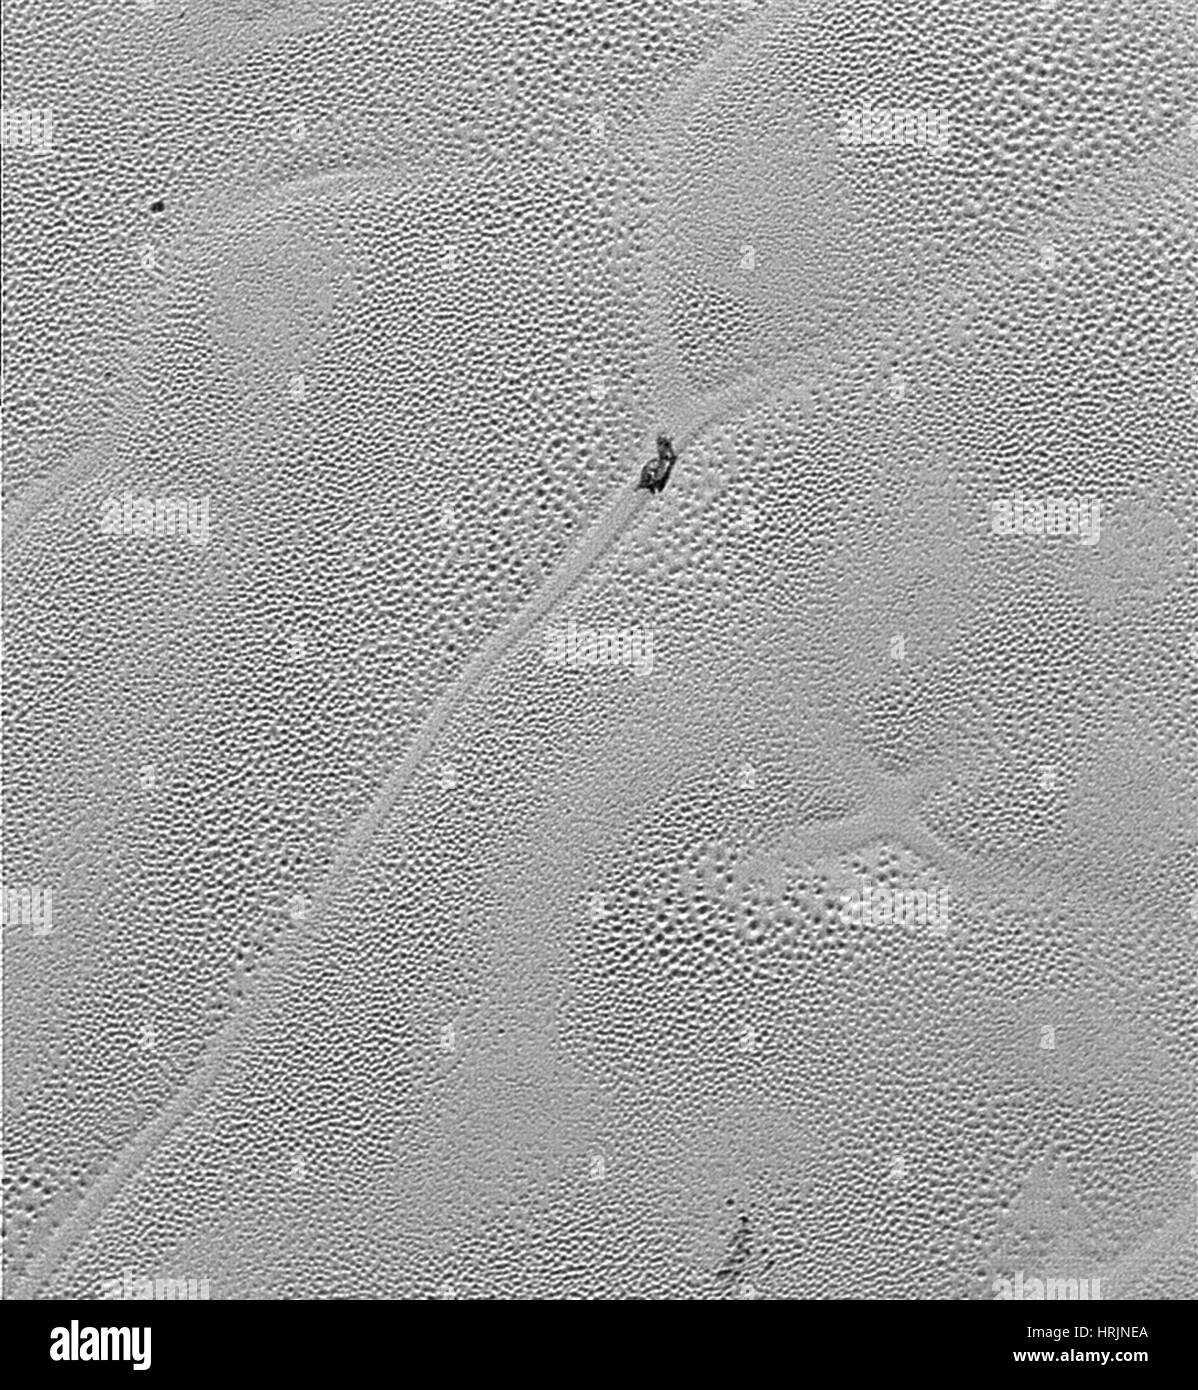 Icy Plains of Pluto Stock Photo